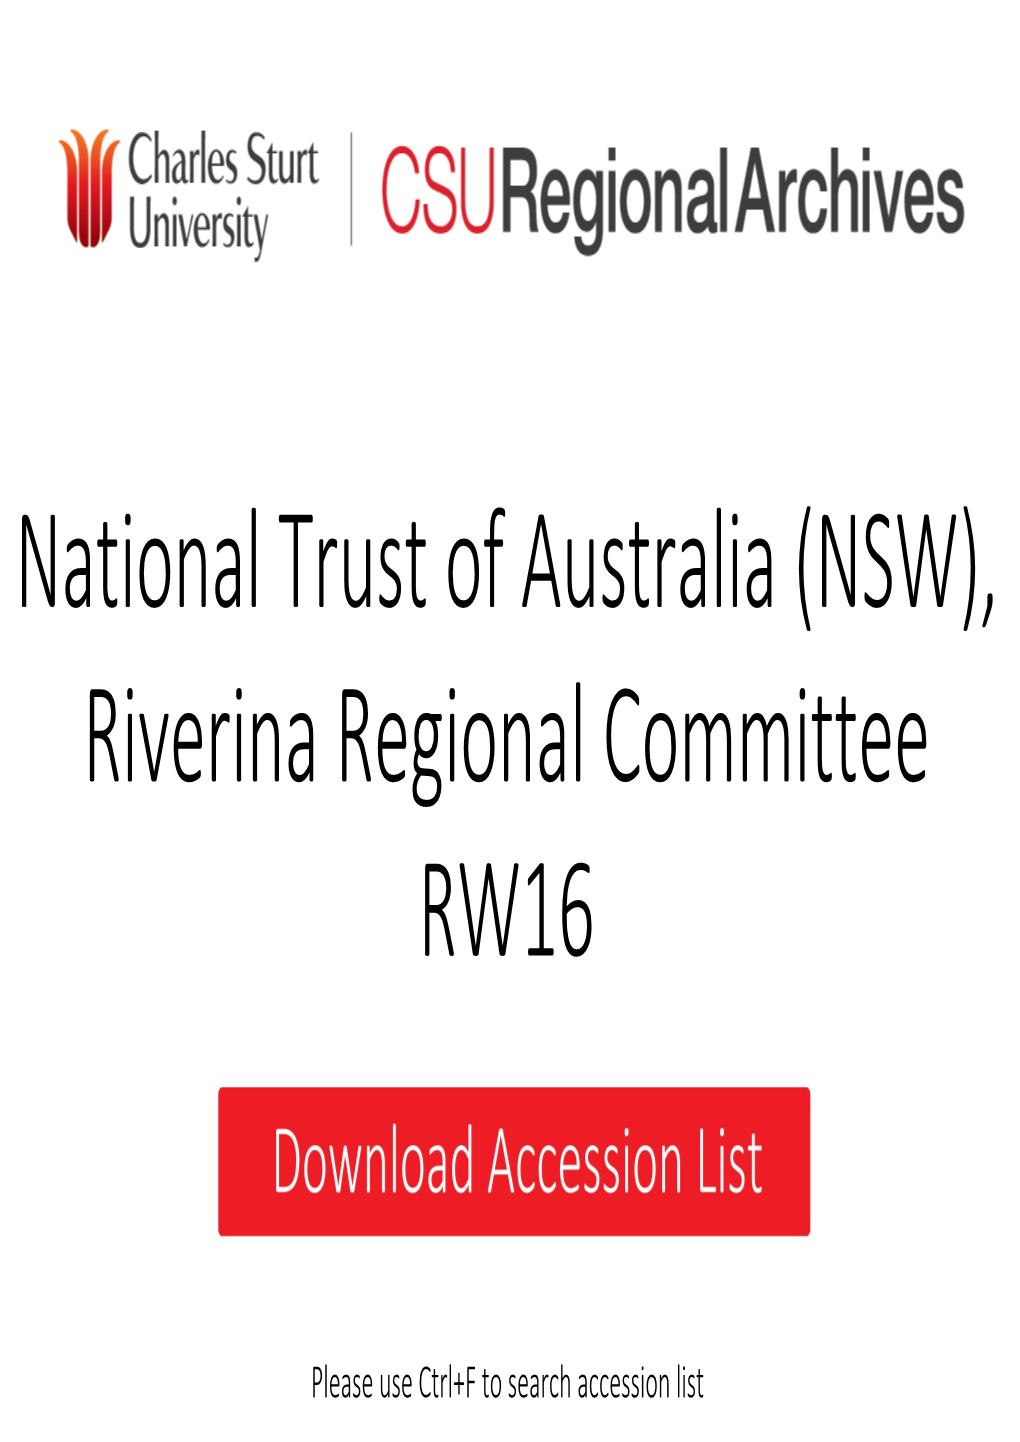 National Trust of Australia (NSW), Riverina Regional Committee RW16